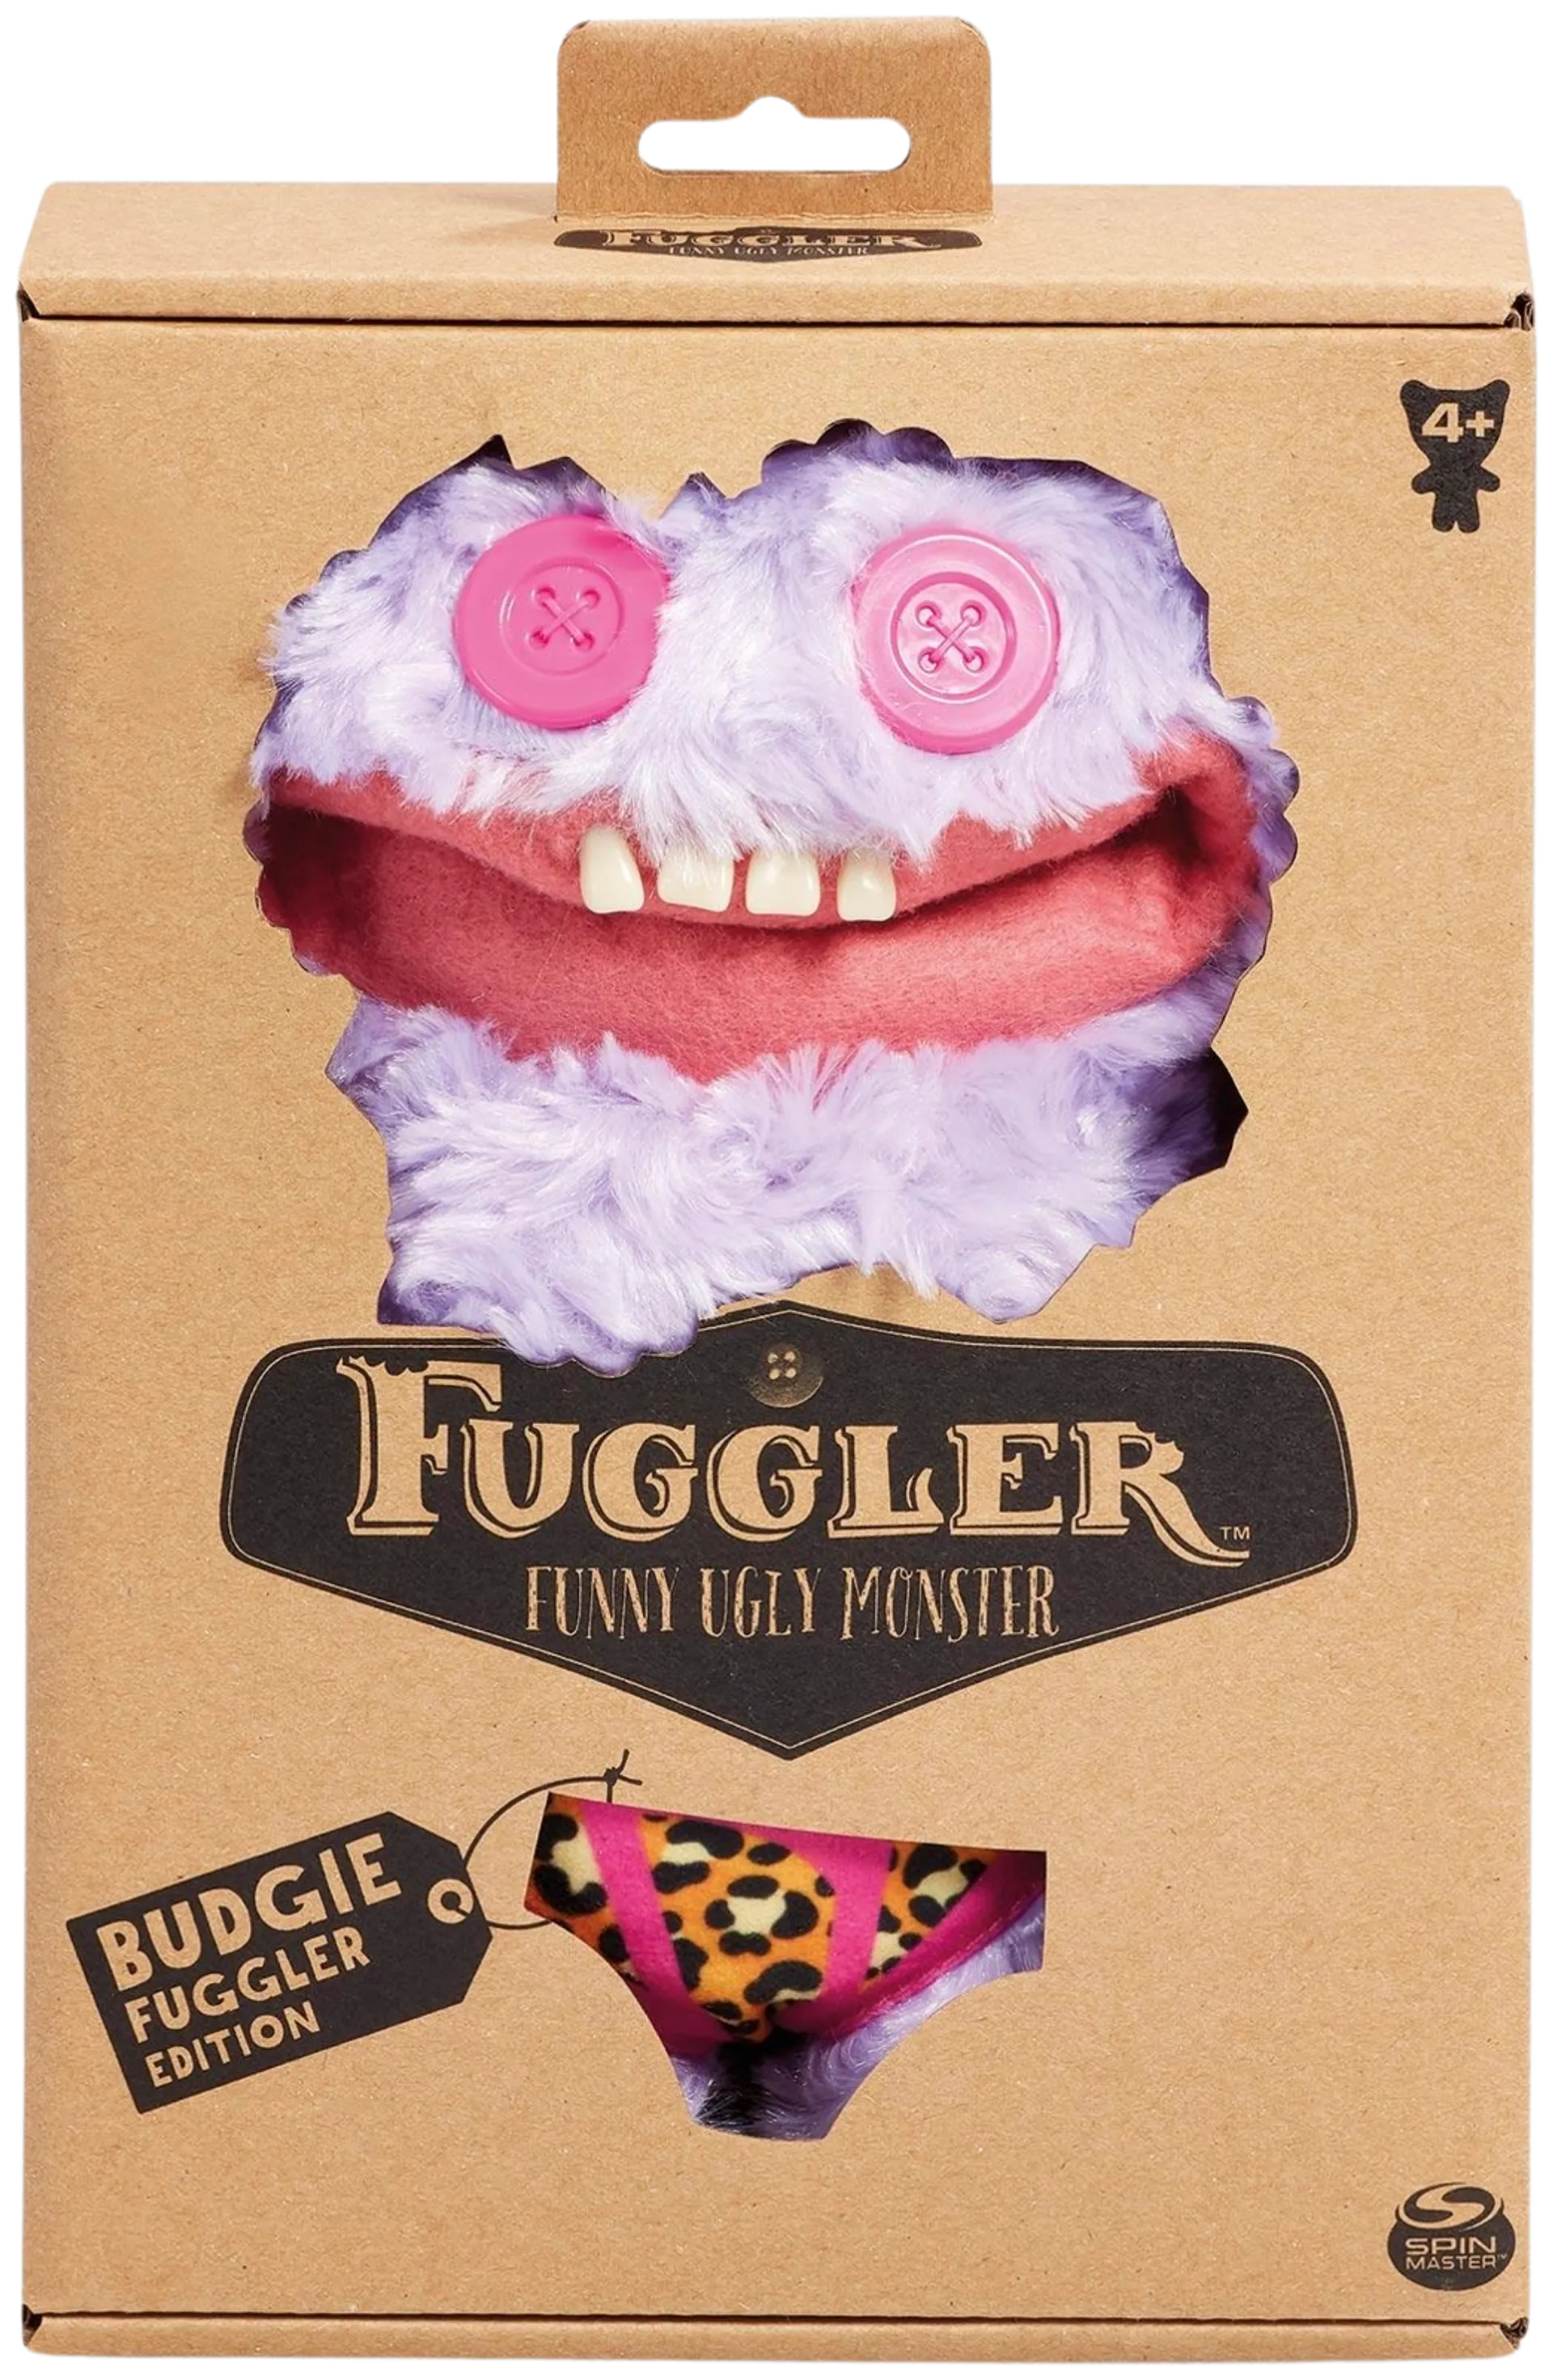 Fuggler Budgie Edition pehmo - 2